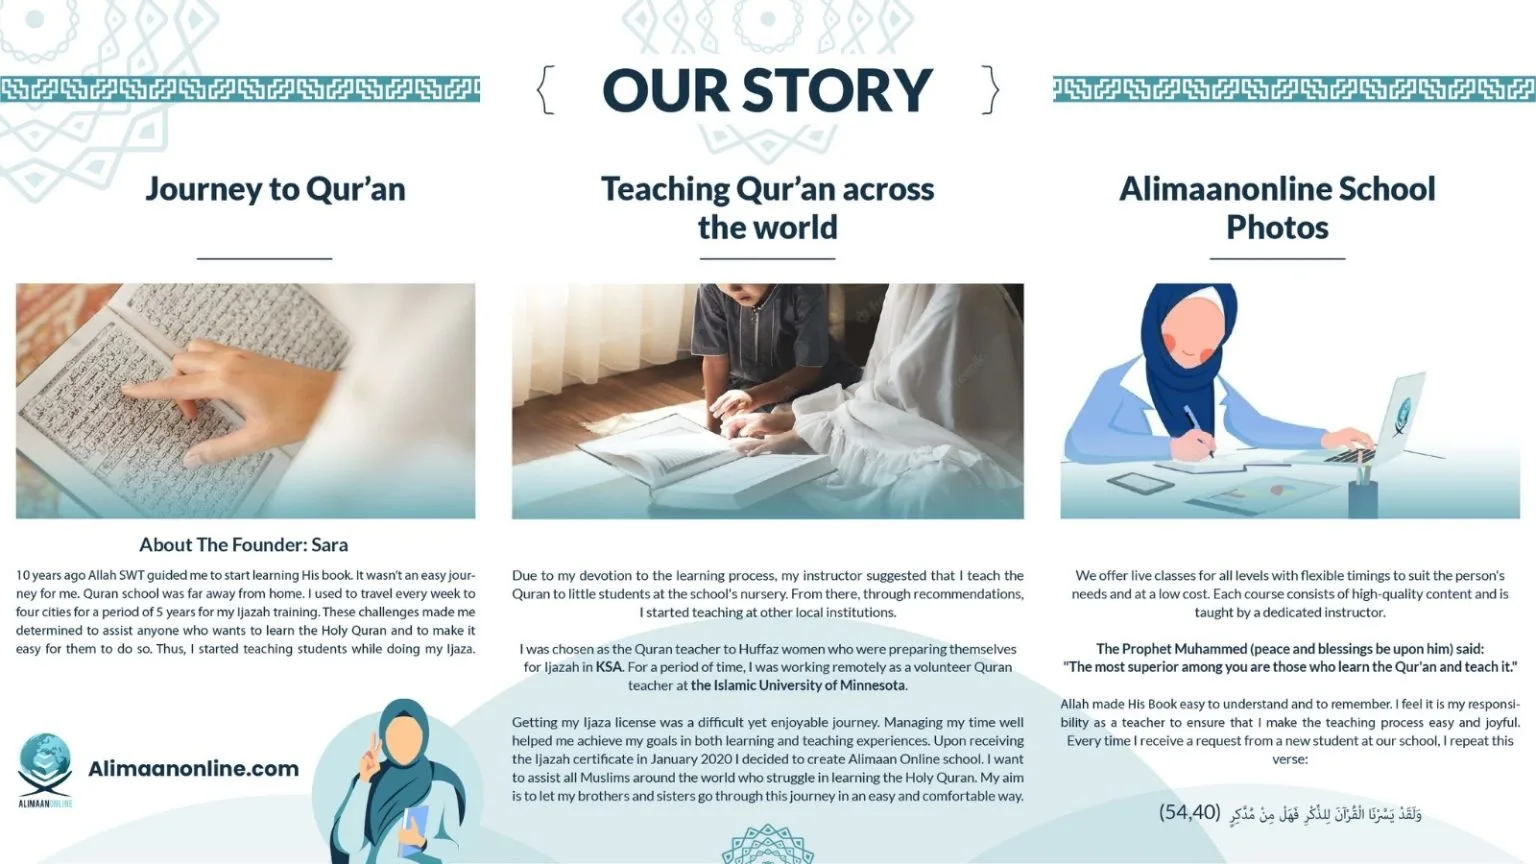 Alimaanonline Scholl Photos - Journey to Quran - Teachning Qura'an across the world